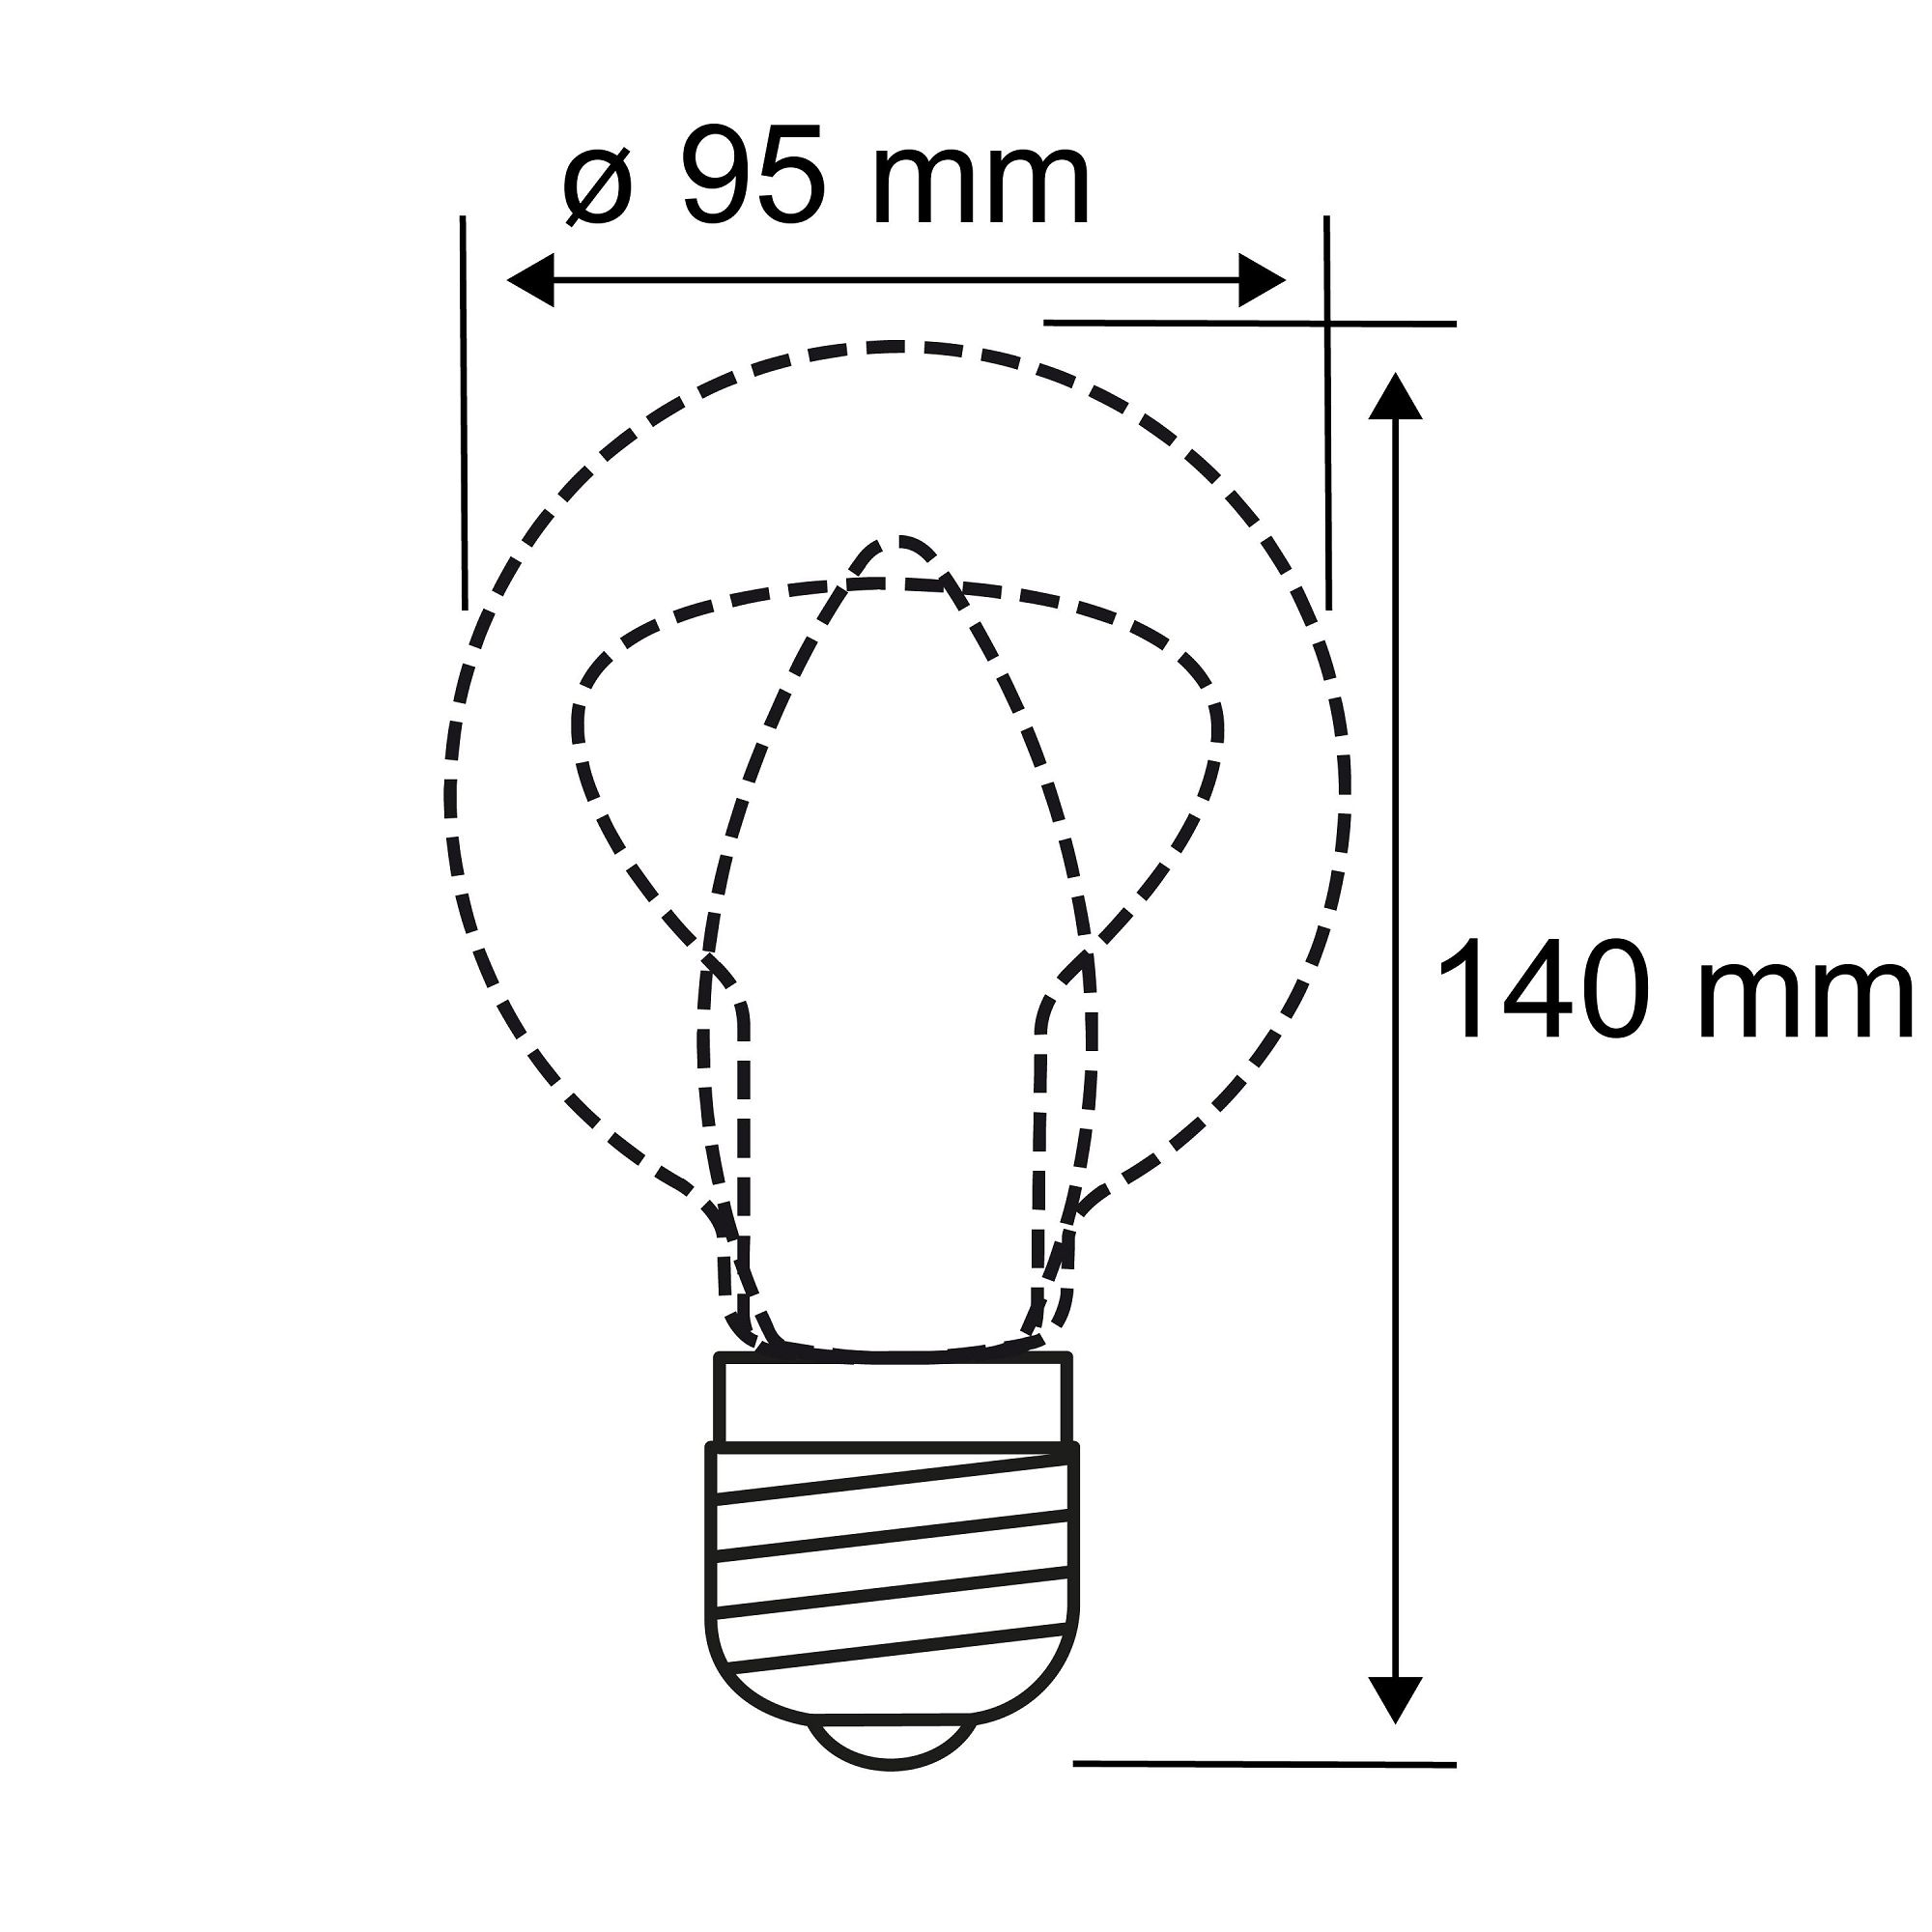 PAULMANN LICHT LED Globe (28970) LED Warmweiß Chip